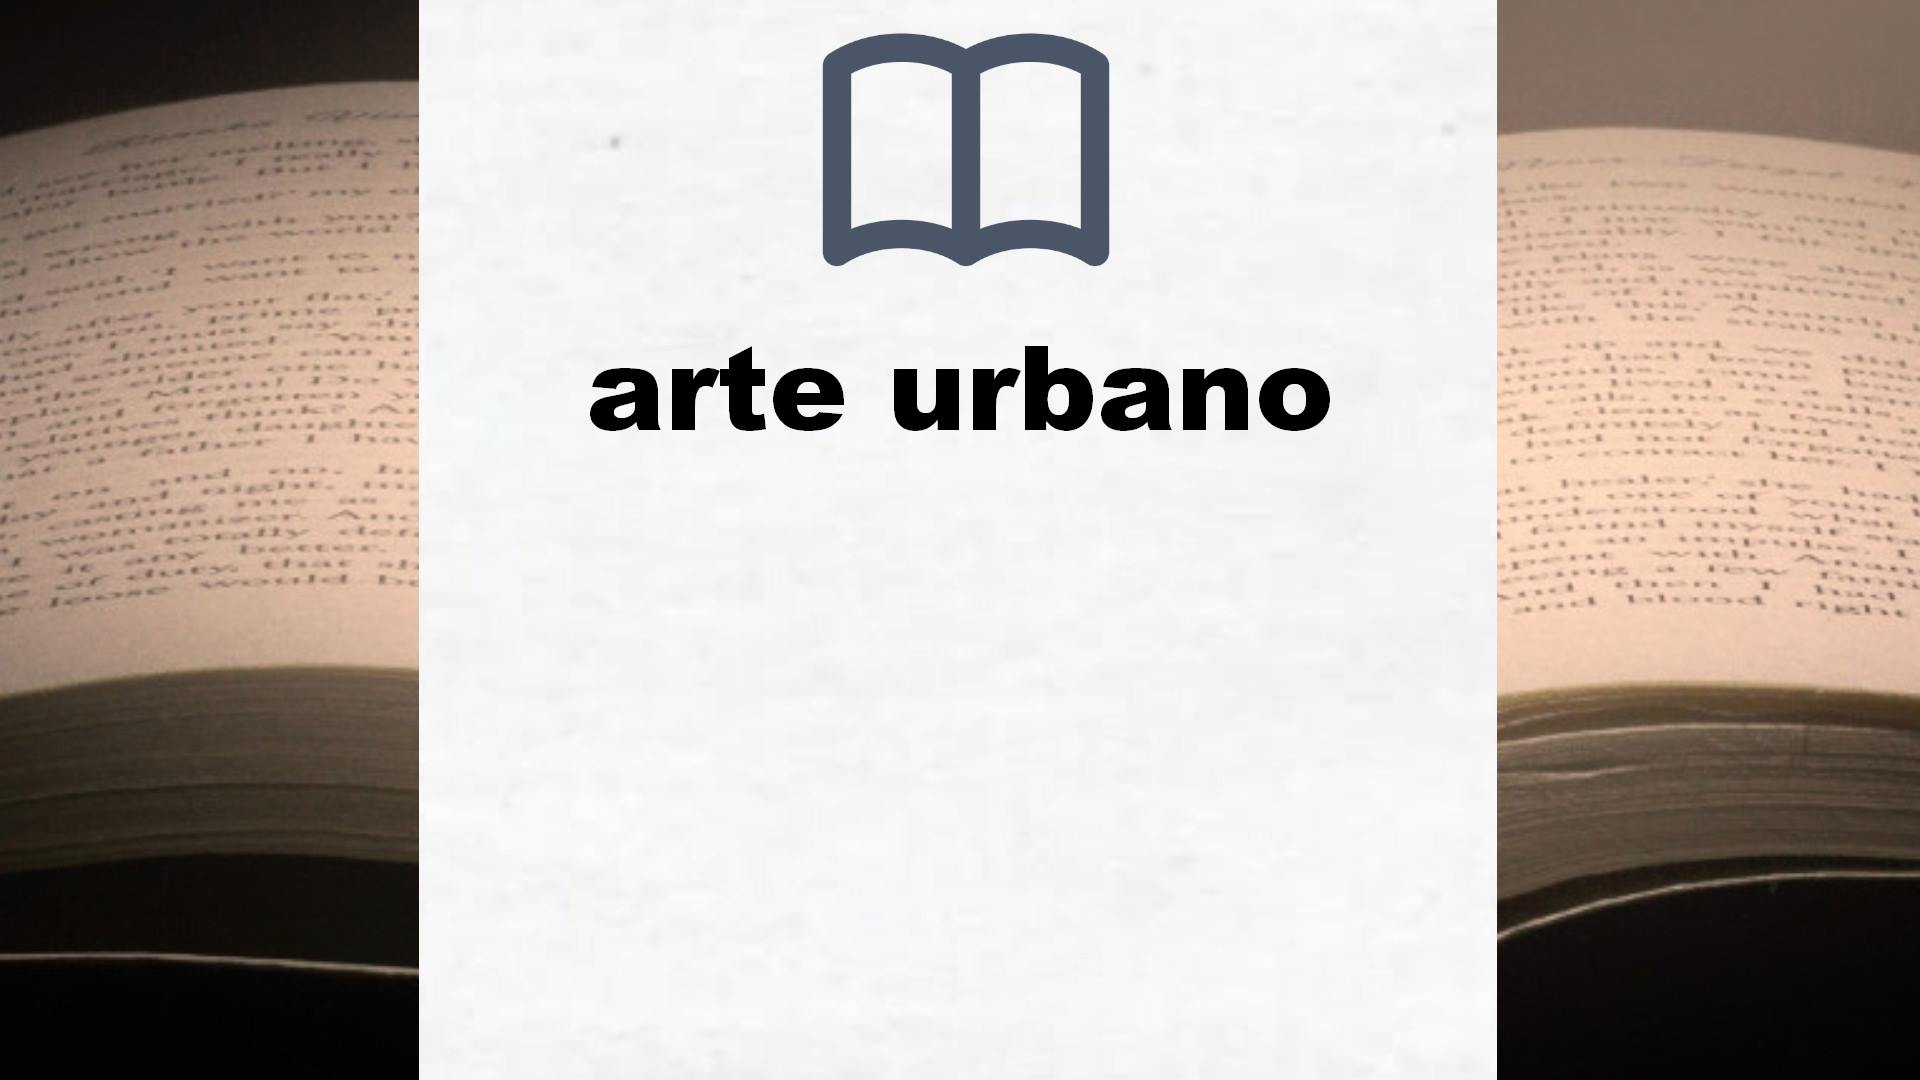 Libros sobre arte urbano